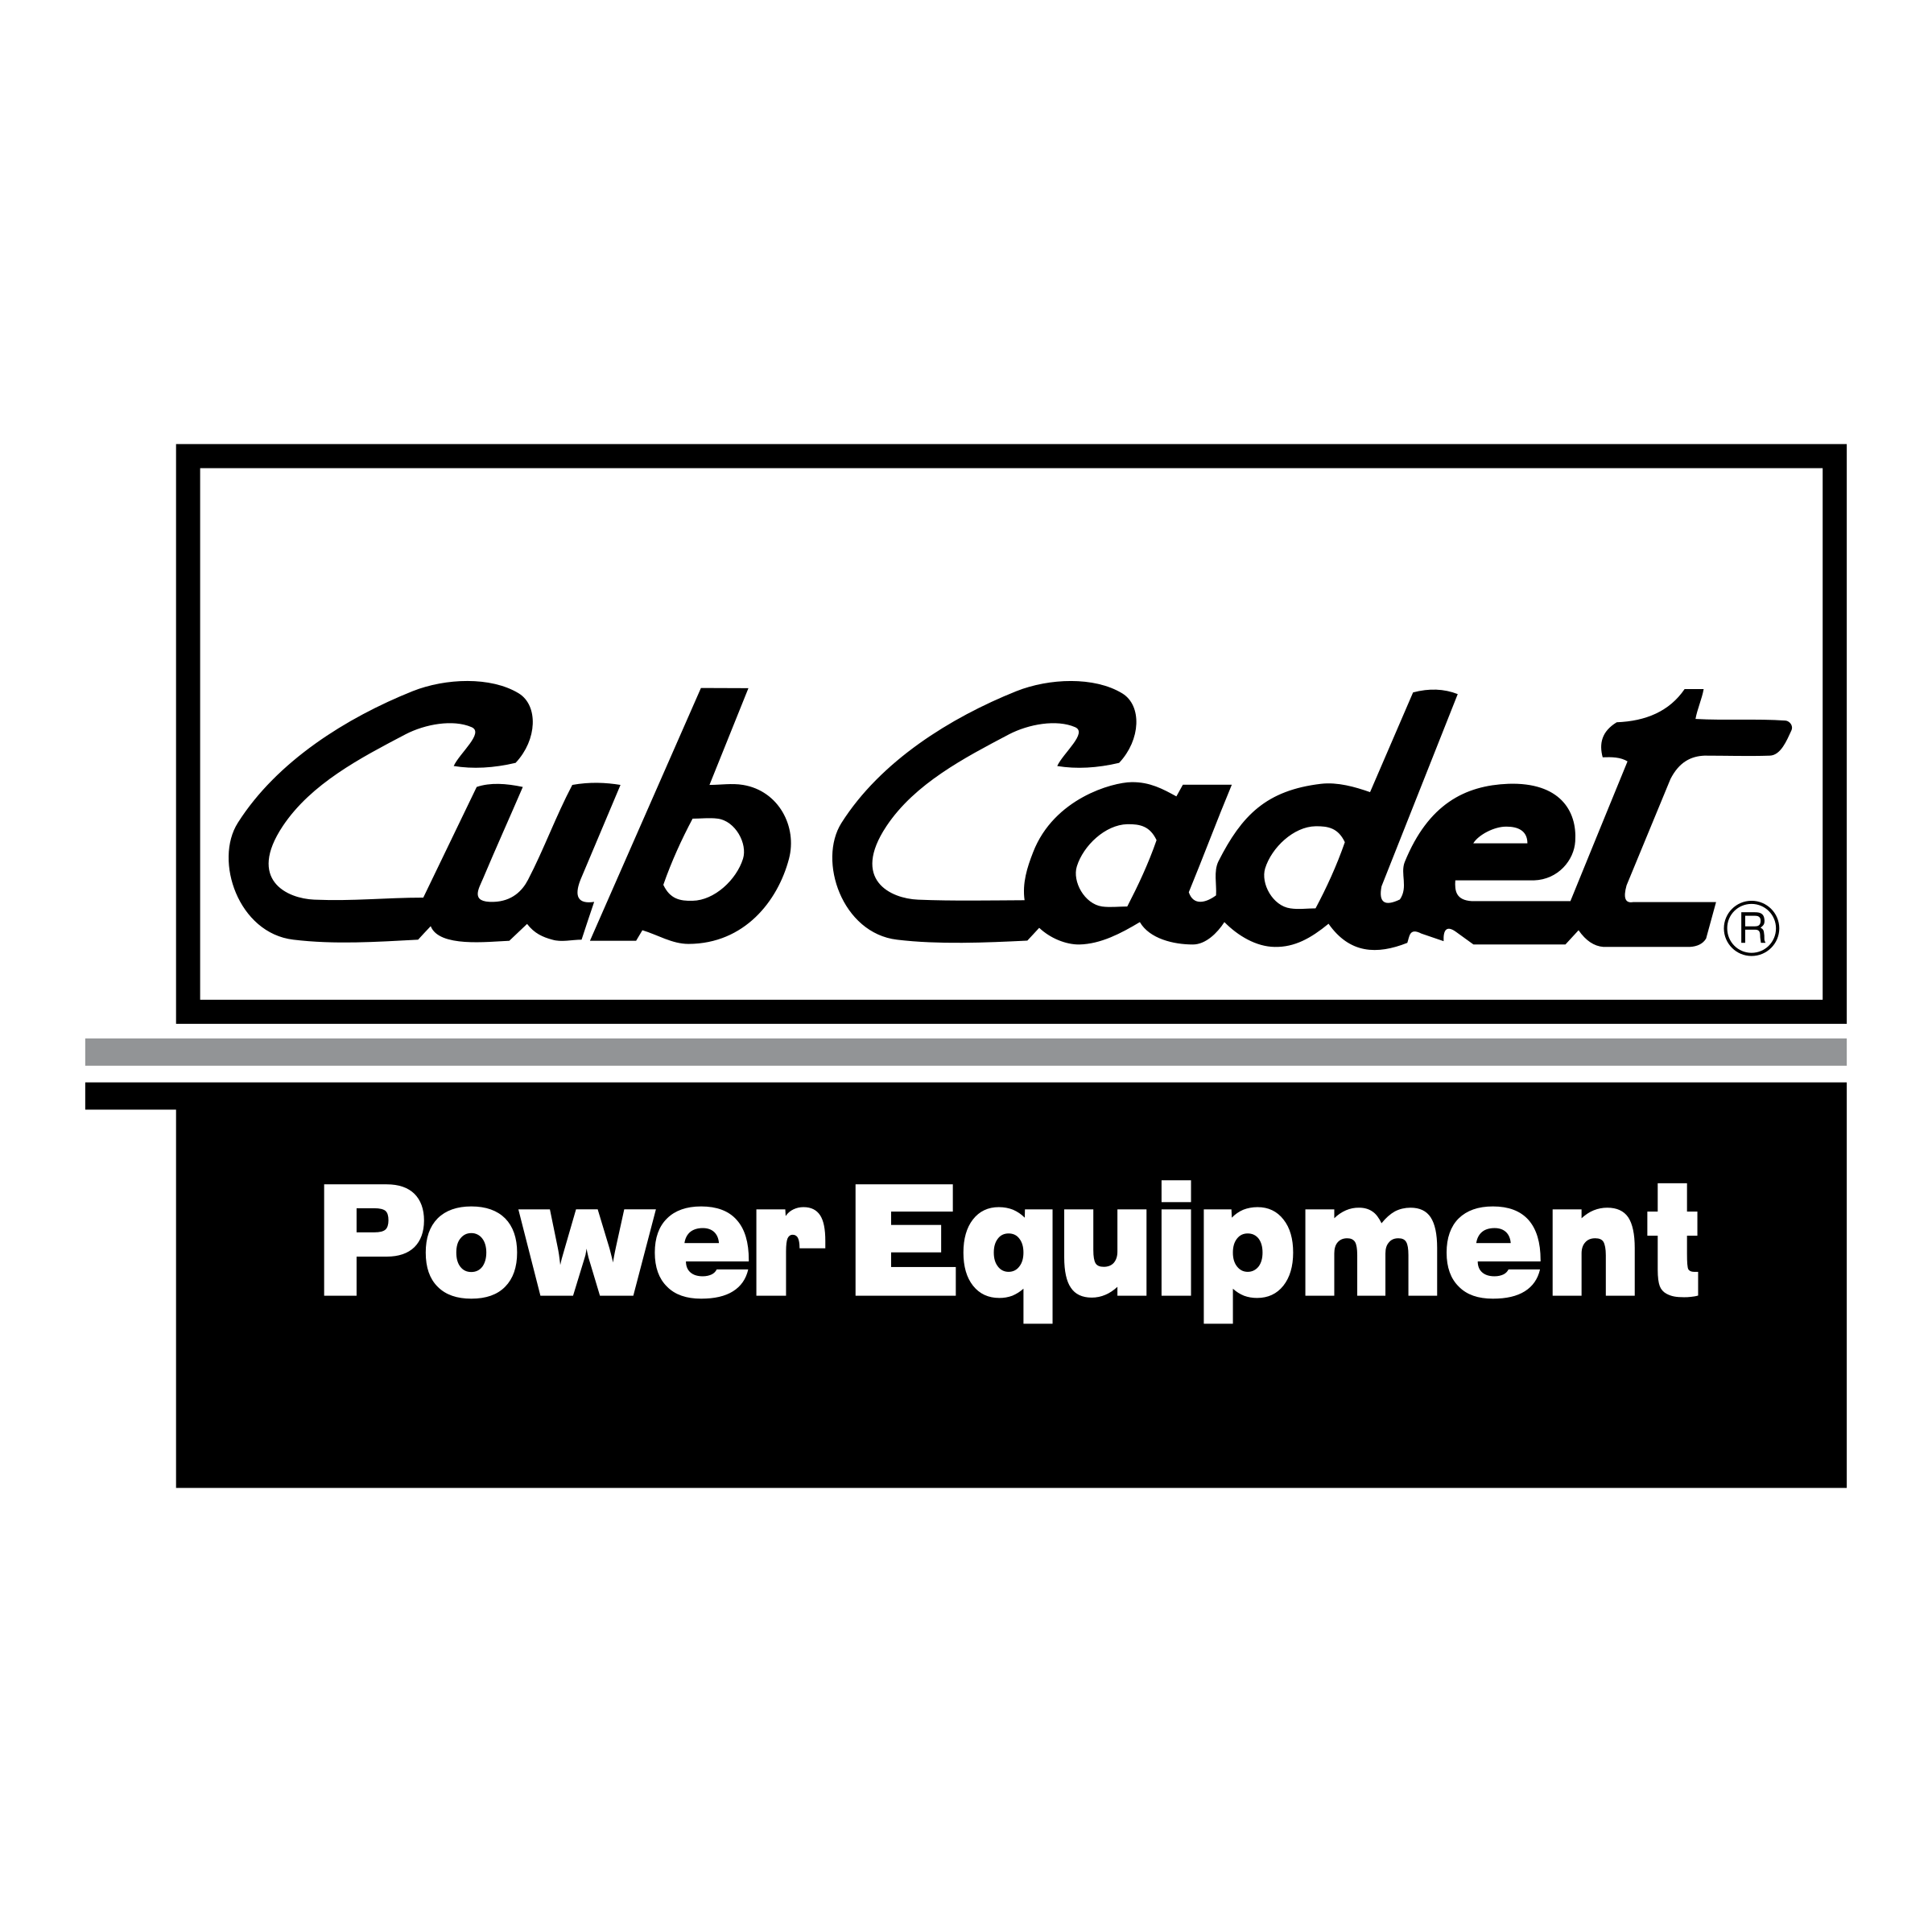 Cadet Logo - Cub Cadet Logo PNG Transparent & SVG Vector - Freebie Supply